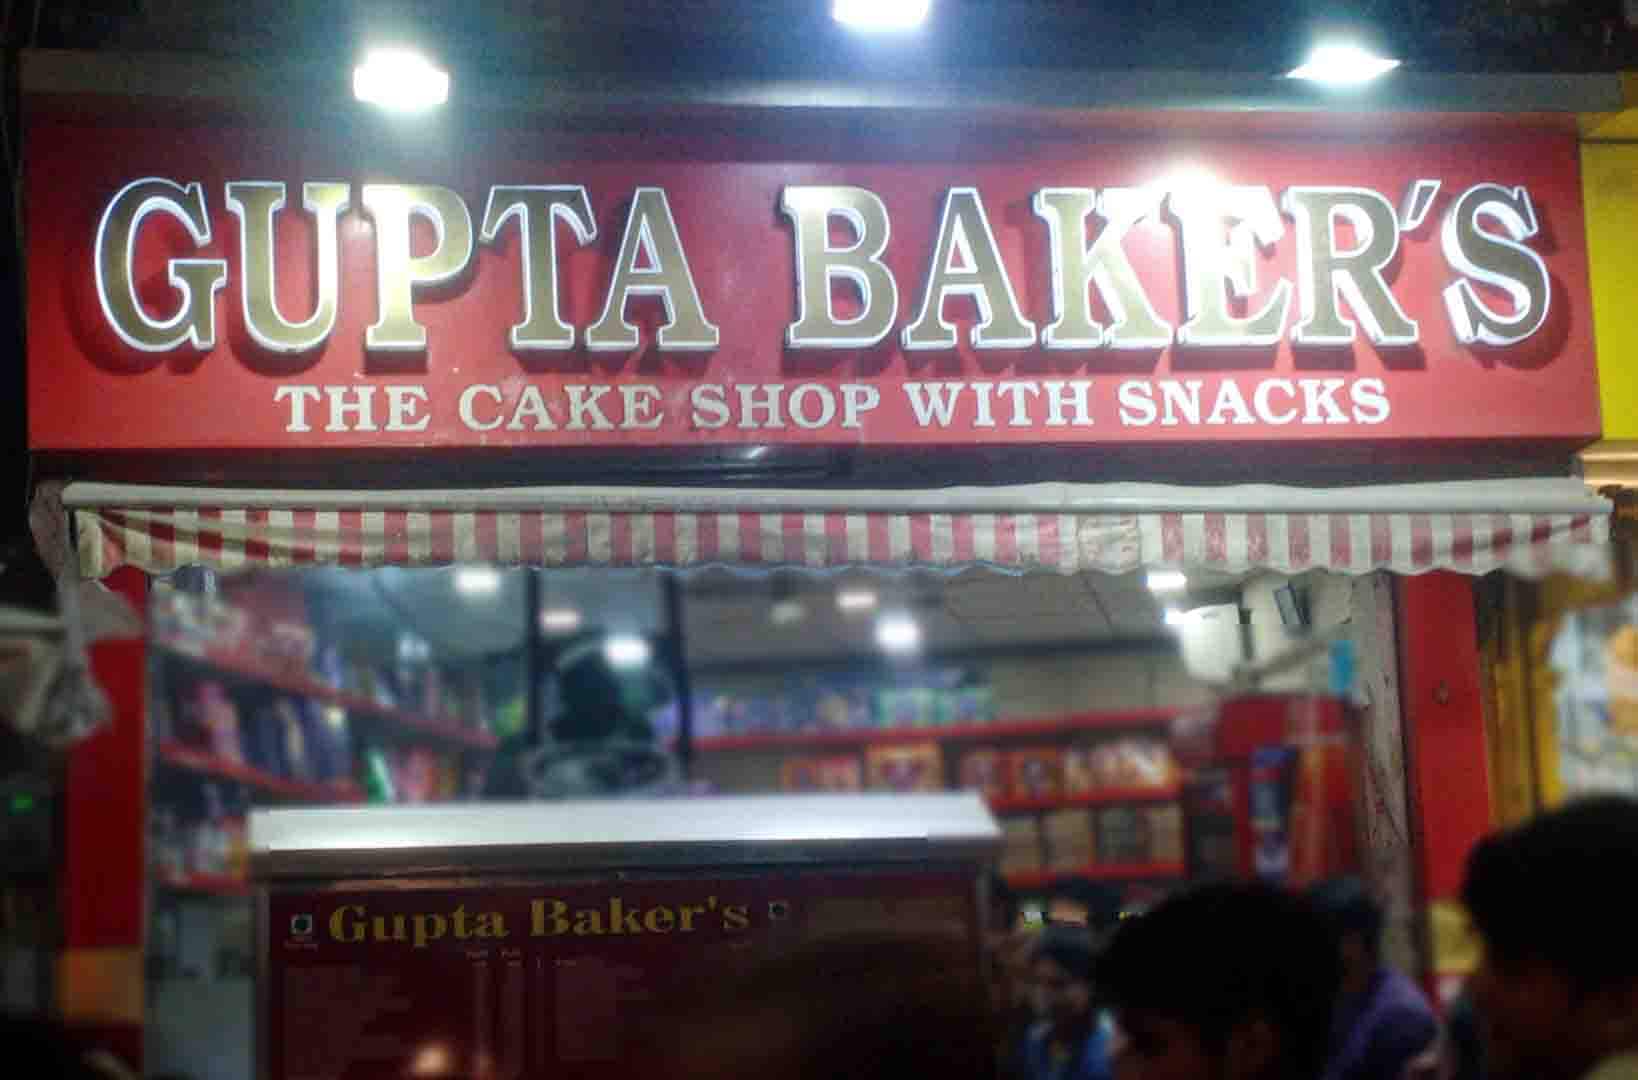 Puri Bakers - Delhi, India - Shopping & Retail, Bakery | Facebook